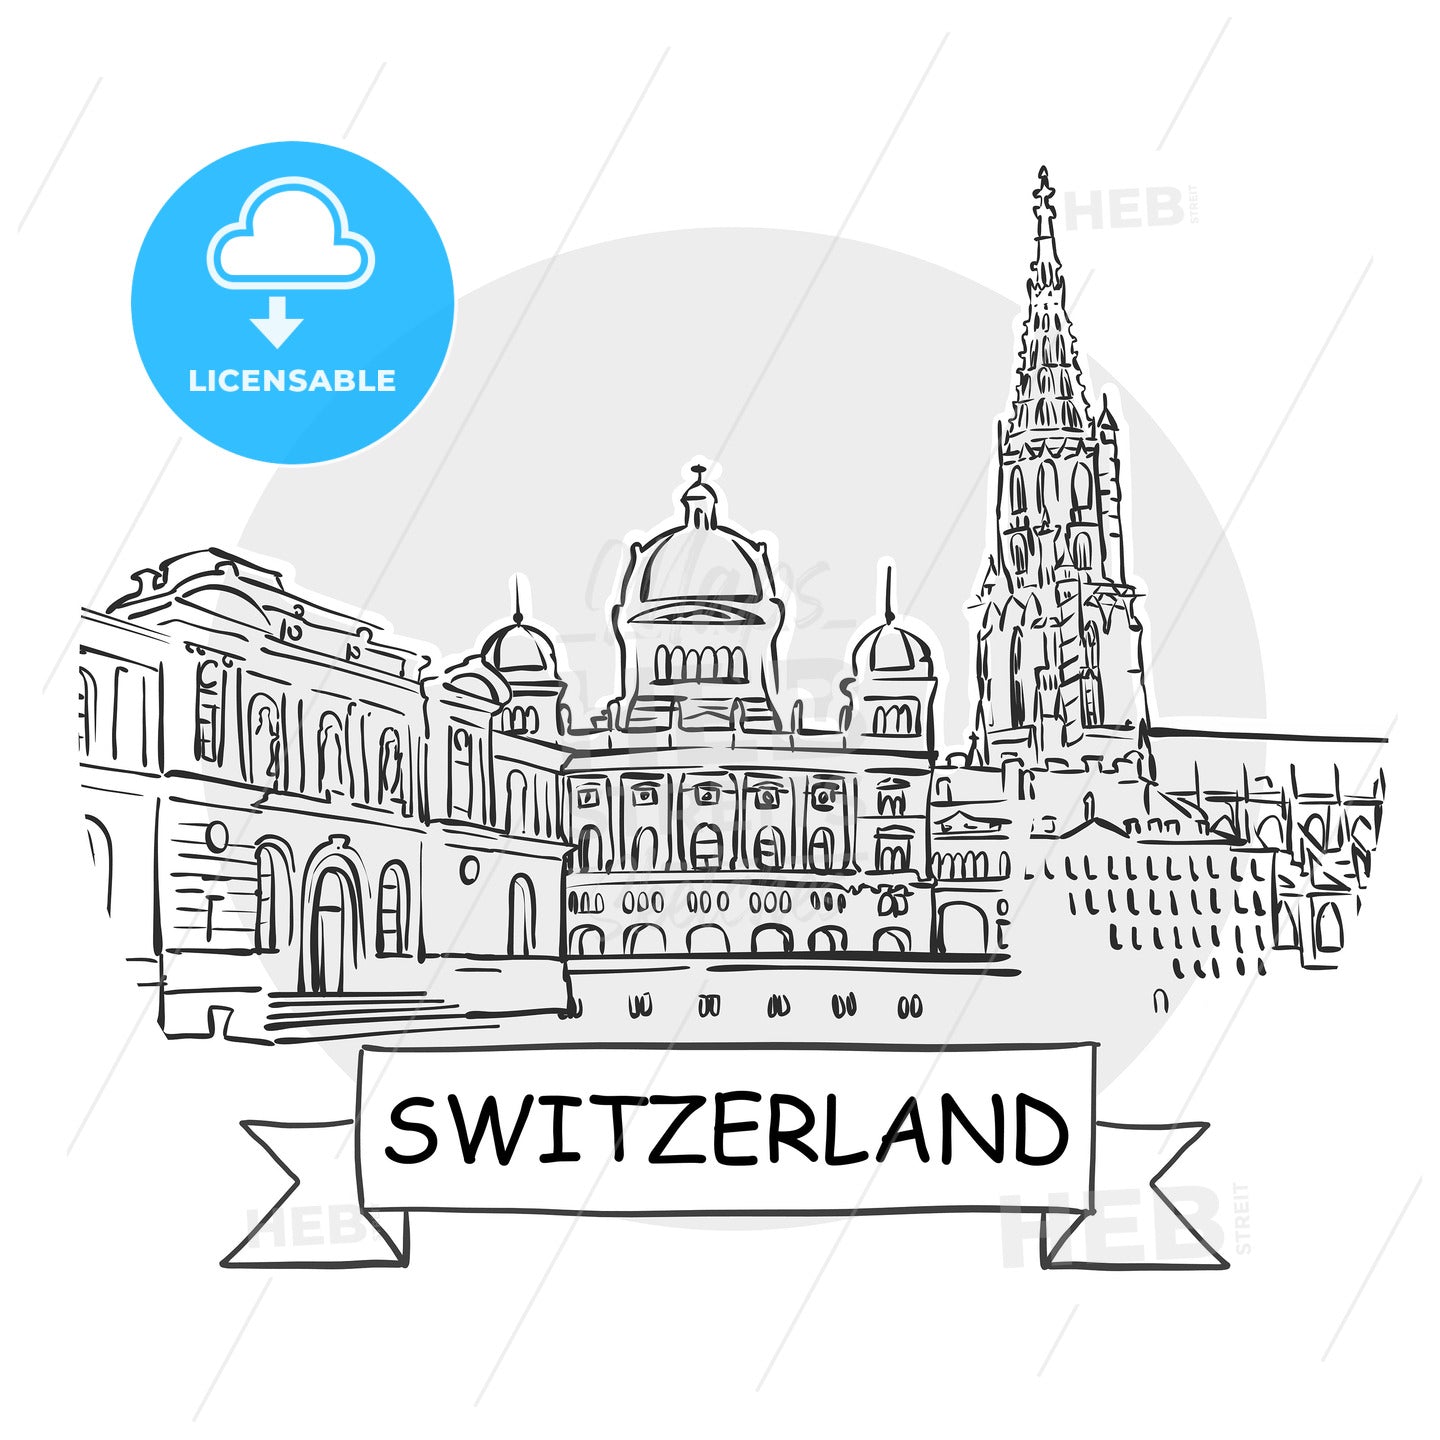 Switzerland hand-drawn urban vector sign – instant download